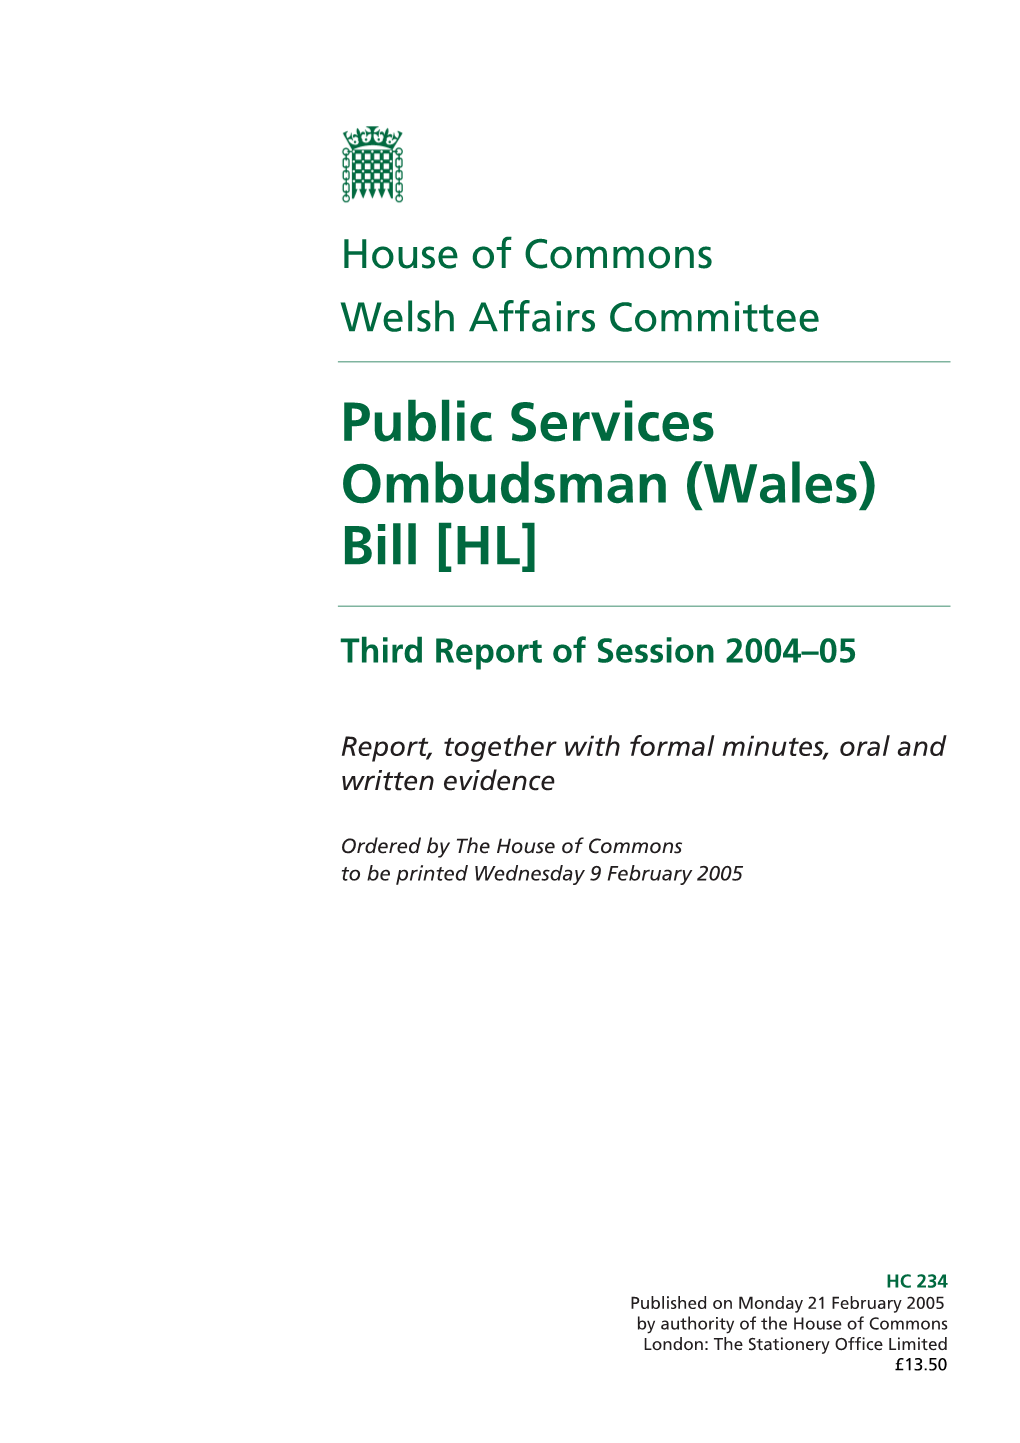 Public Services Ombudsman (Wales) Bill [HL]